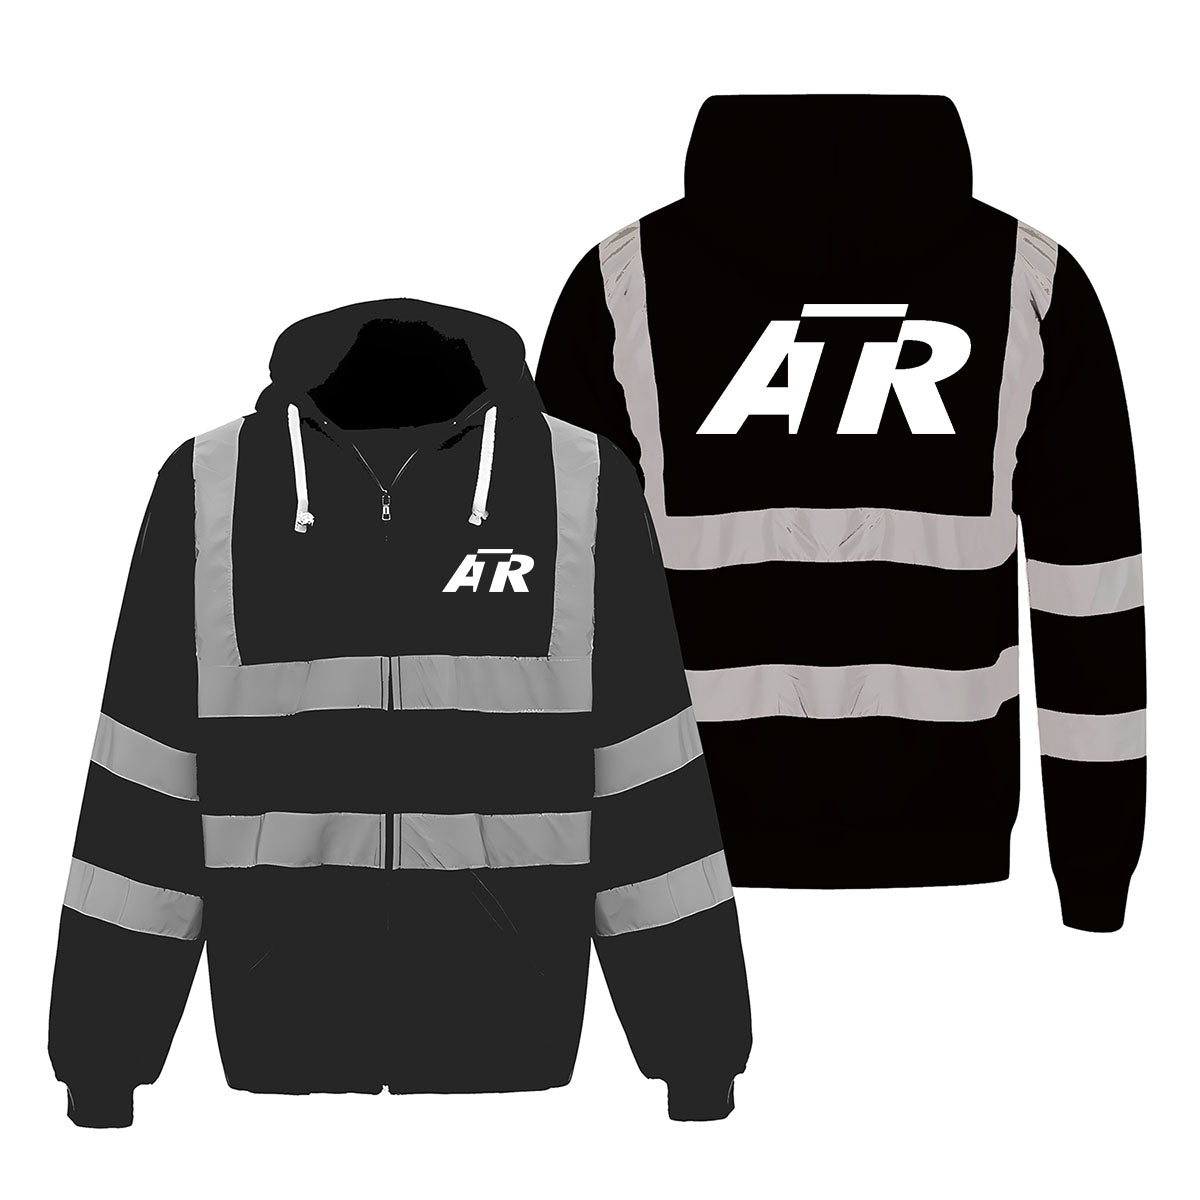 ATR & Text Designed Reflective Zipped Hoodies